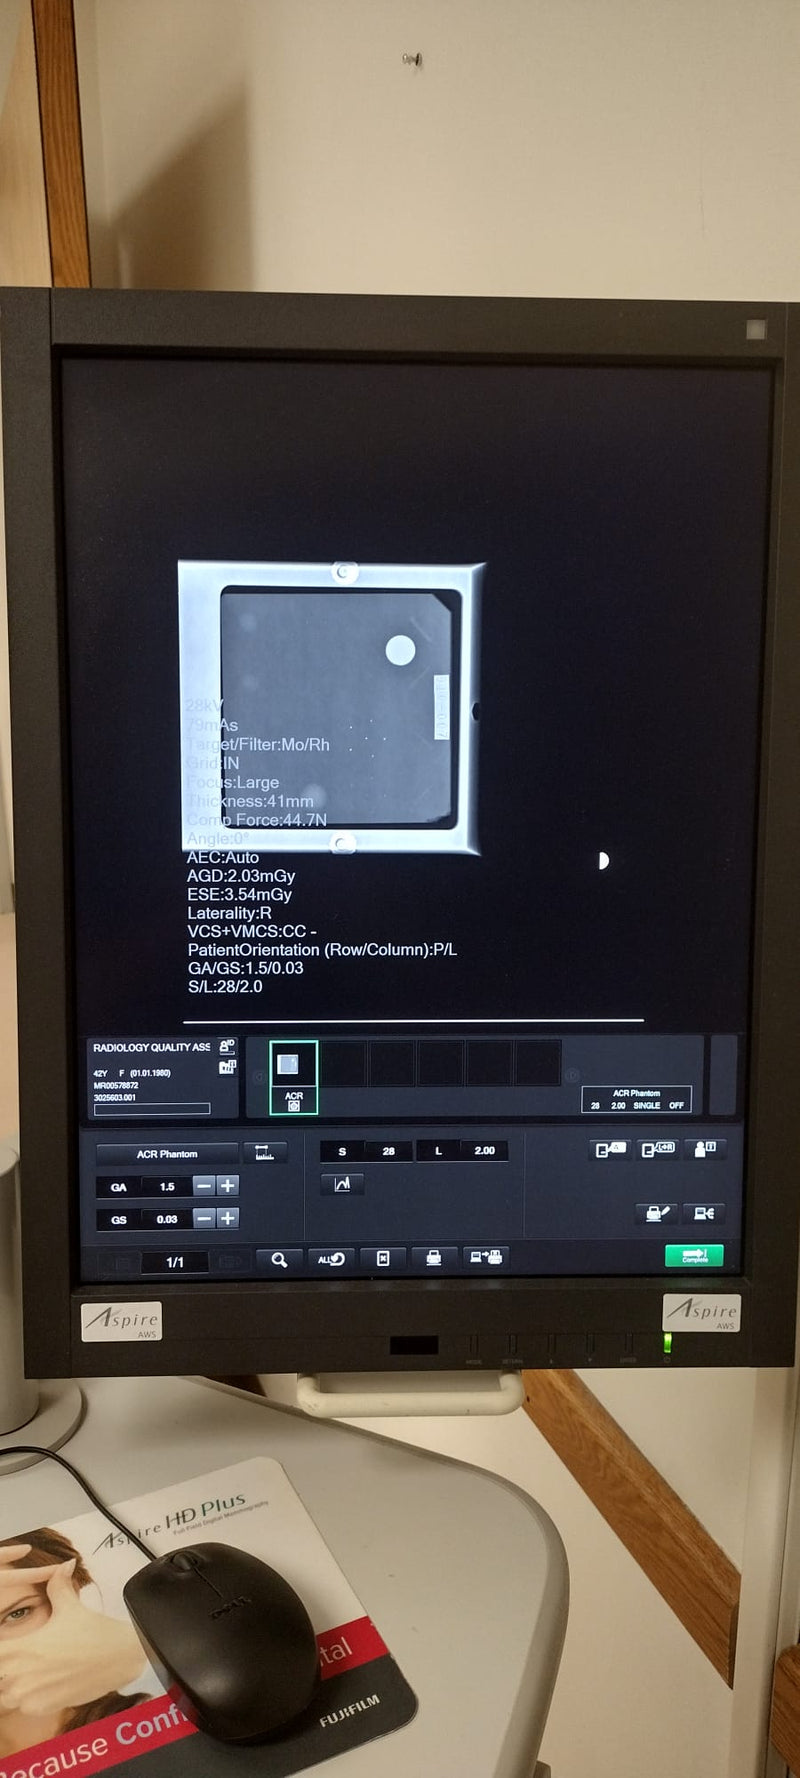 2012 Fujifilm Aspire HD Mammogram Unit